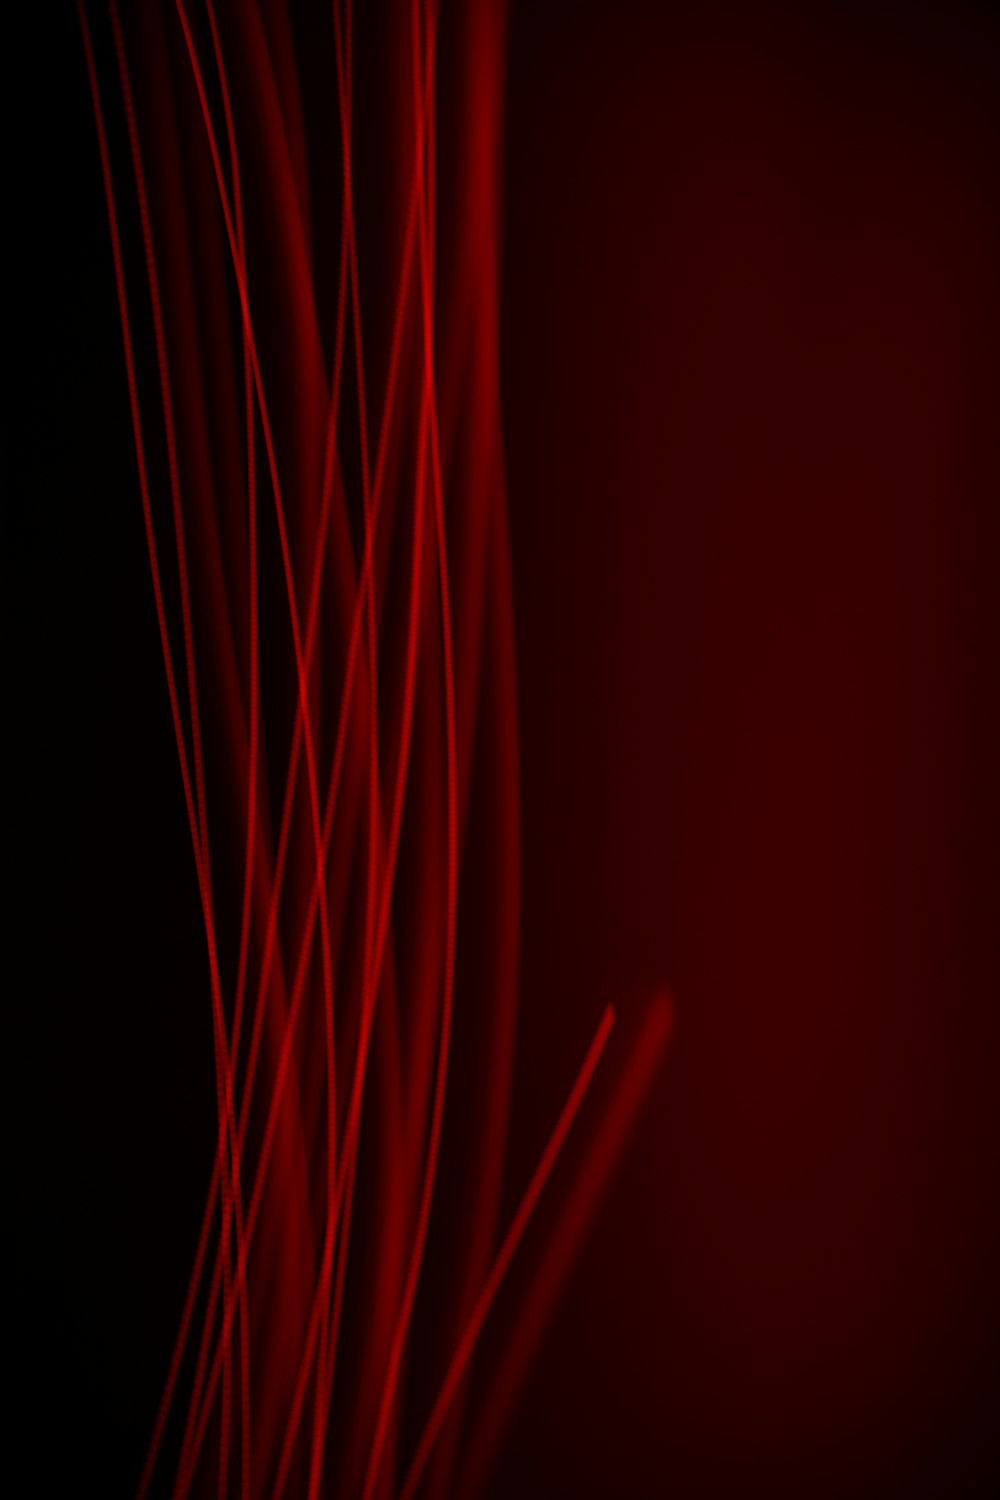 red light in dark room photo – Free Black Image on Unsplash